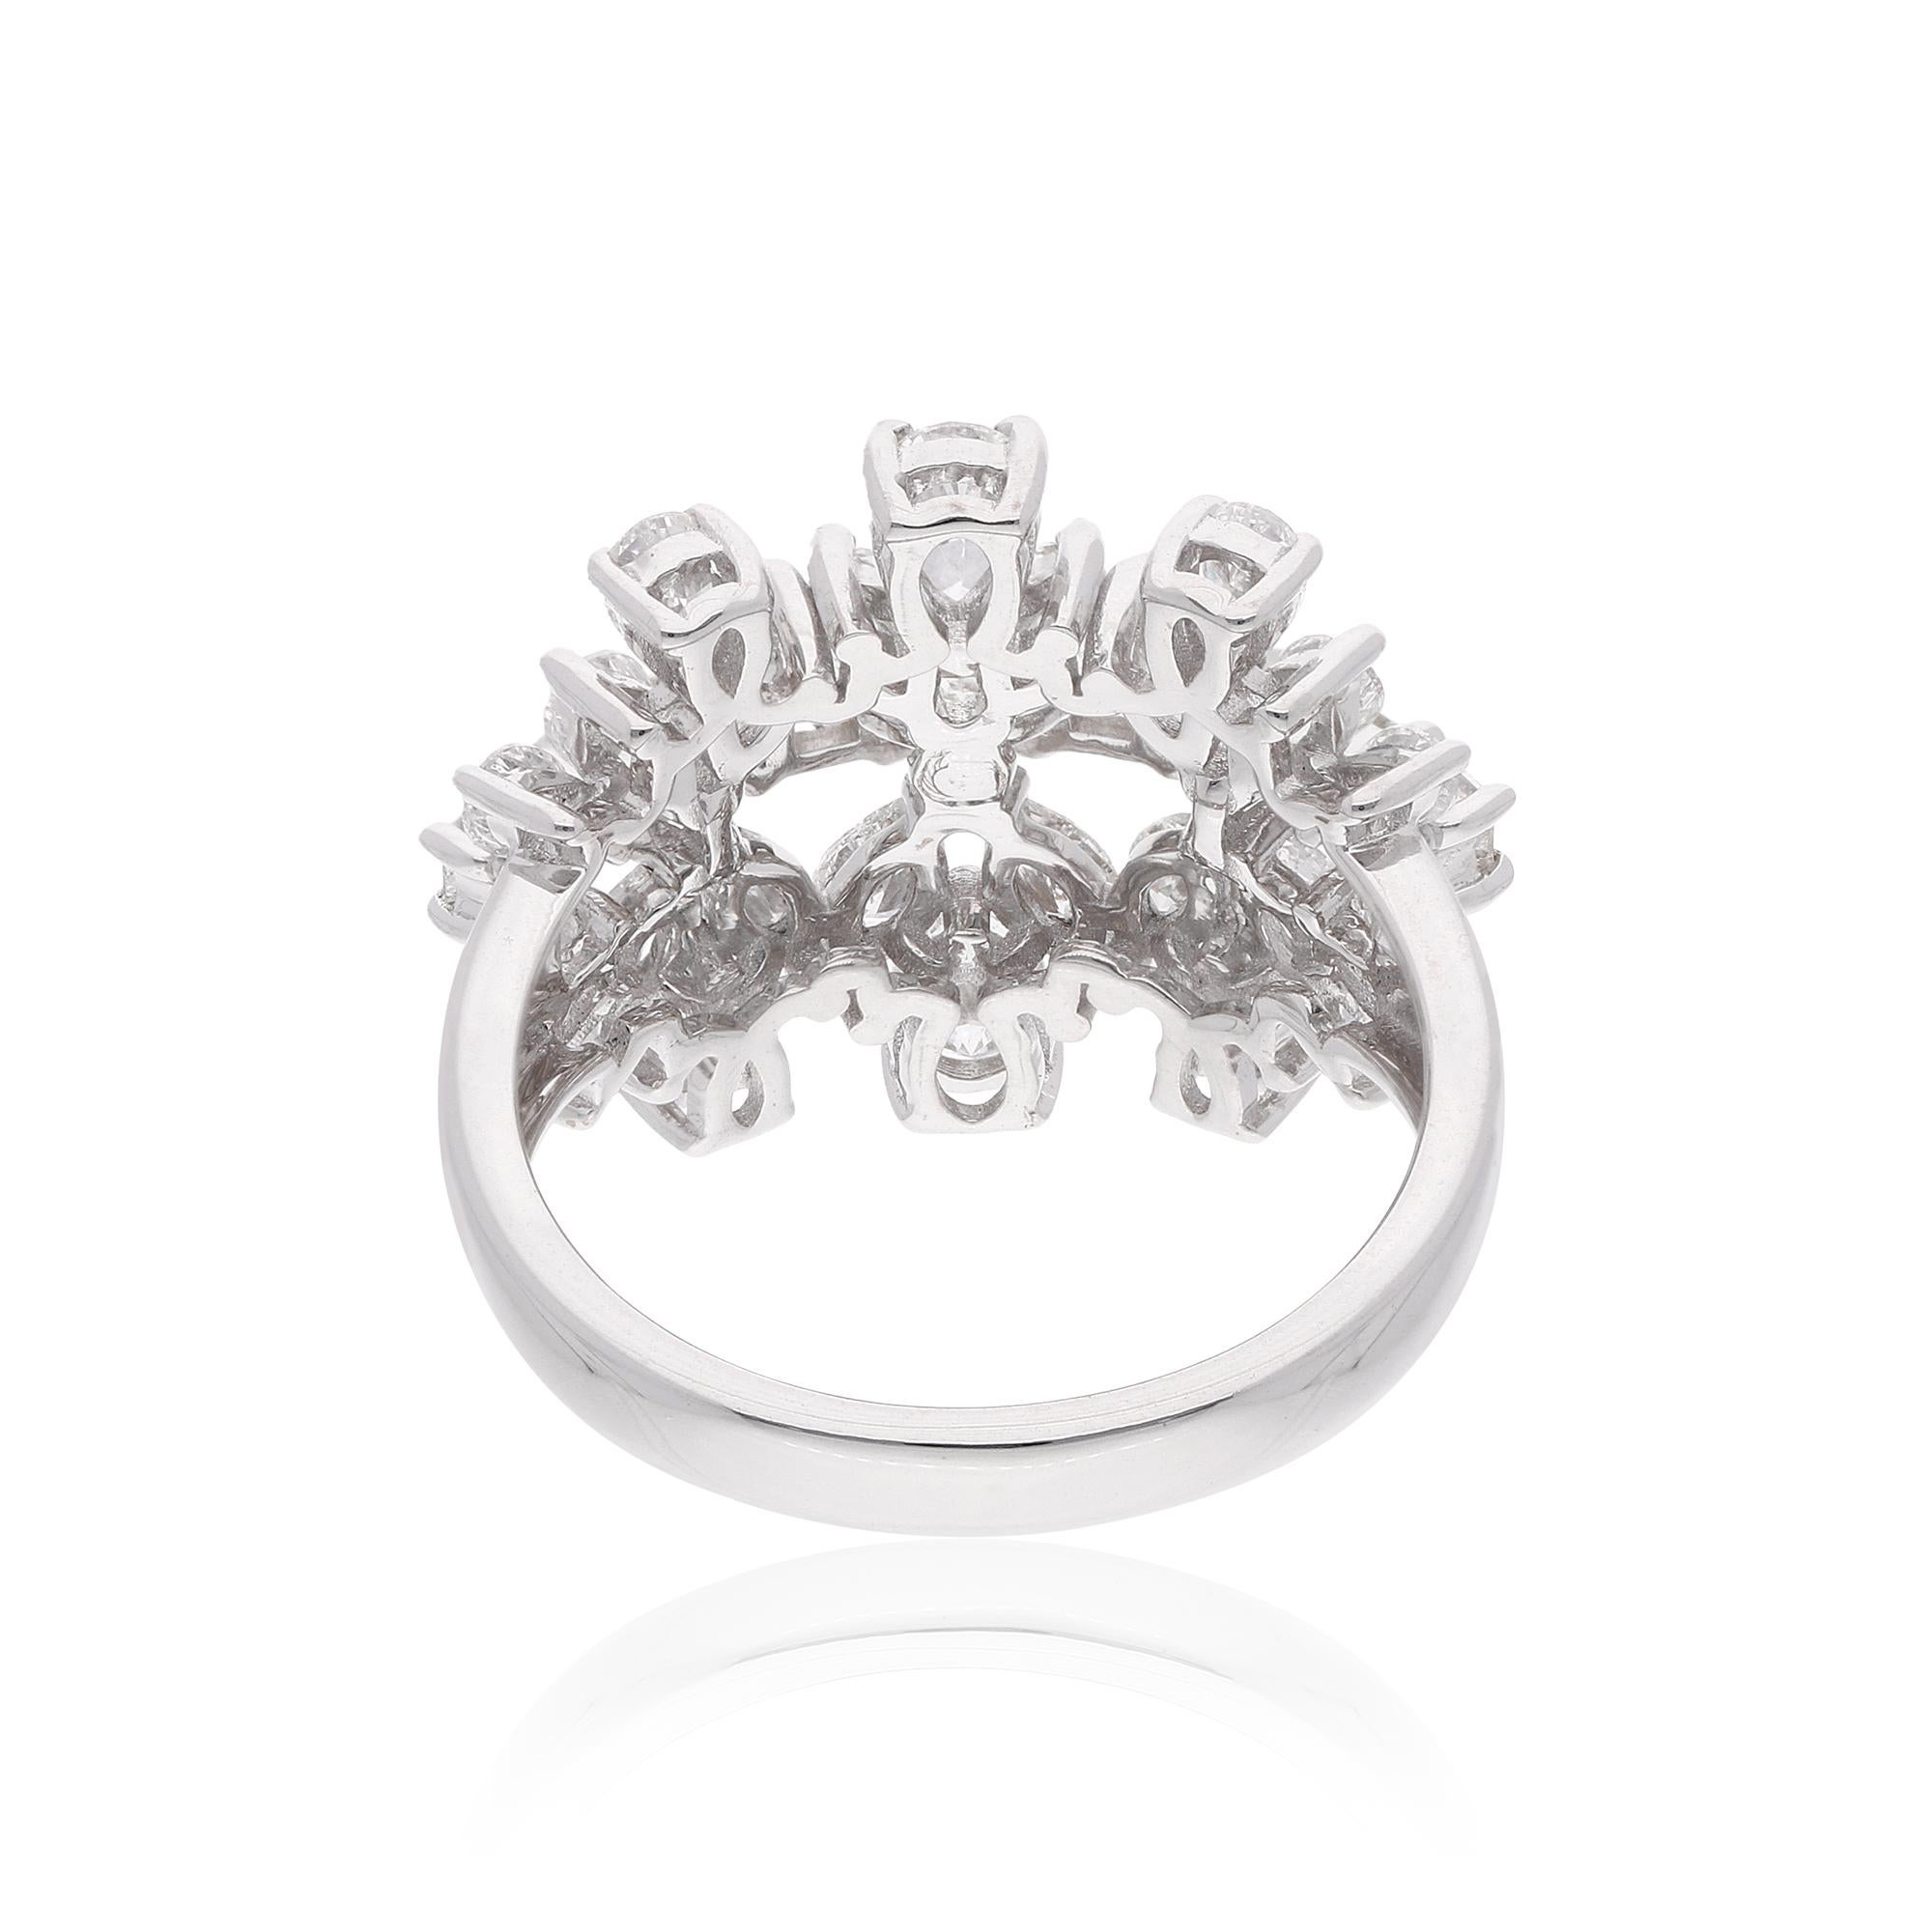 2.45 Carat SI/HI Princess Cut Diamond Cocktail Ring 18 Karat White Gold Jewelry For Sale 1